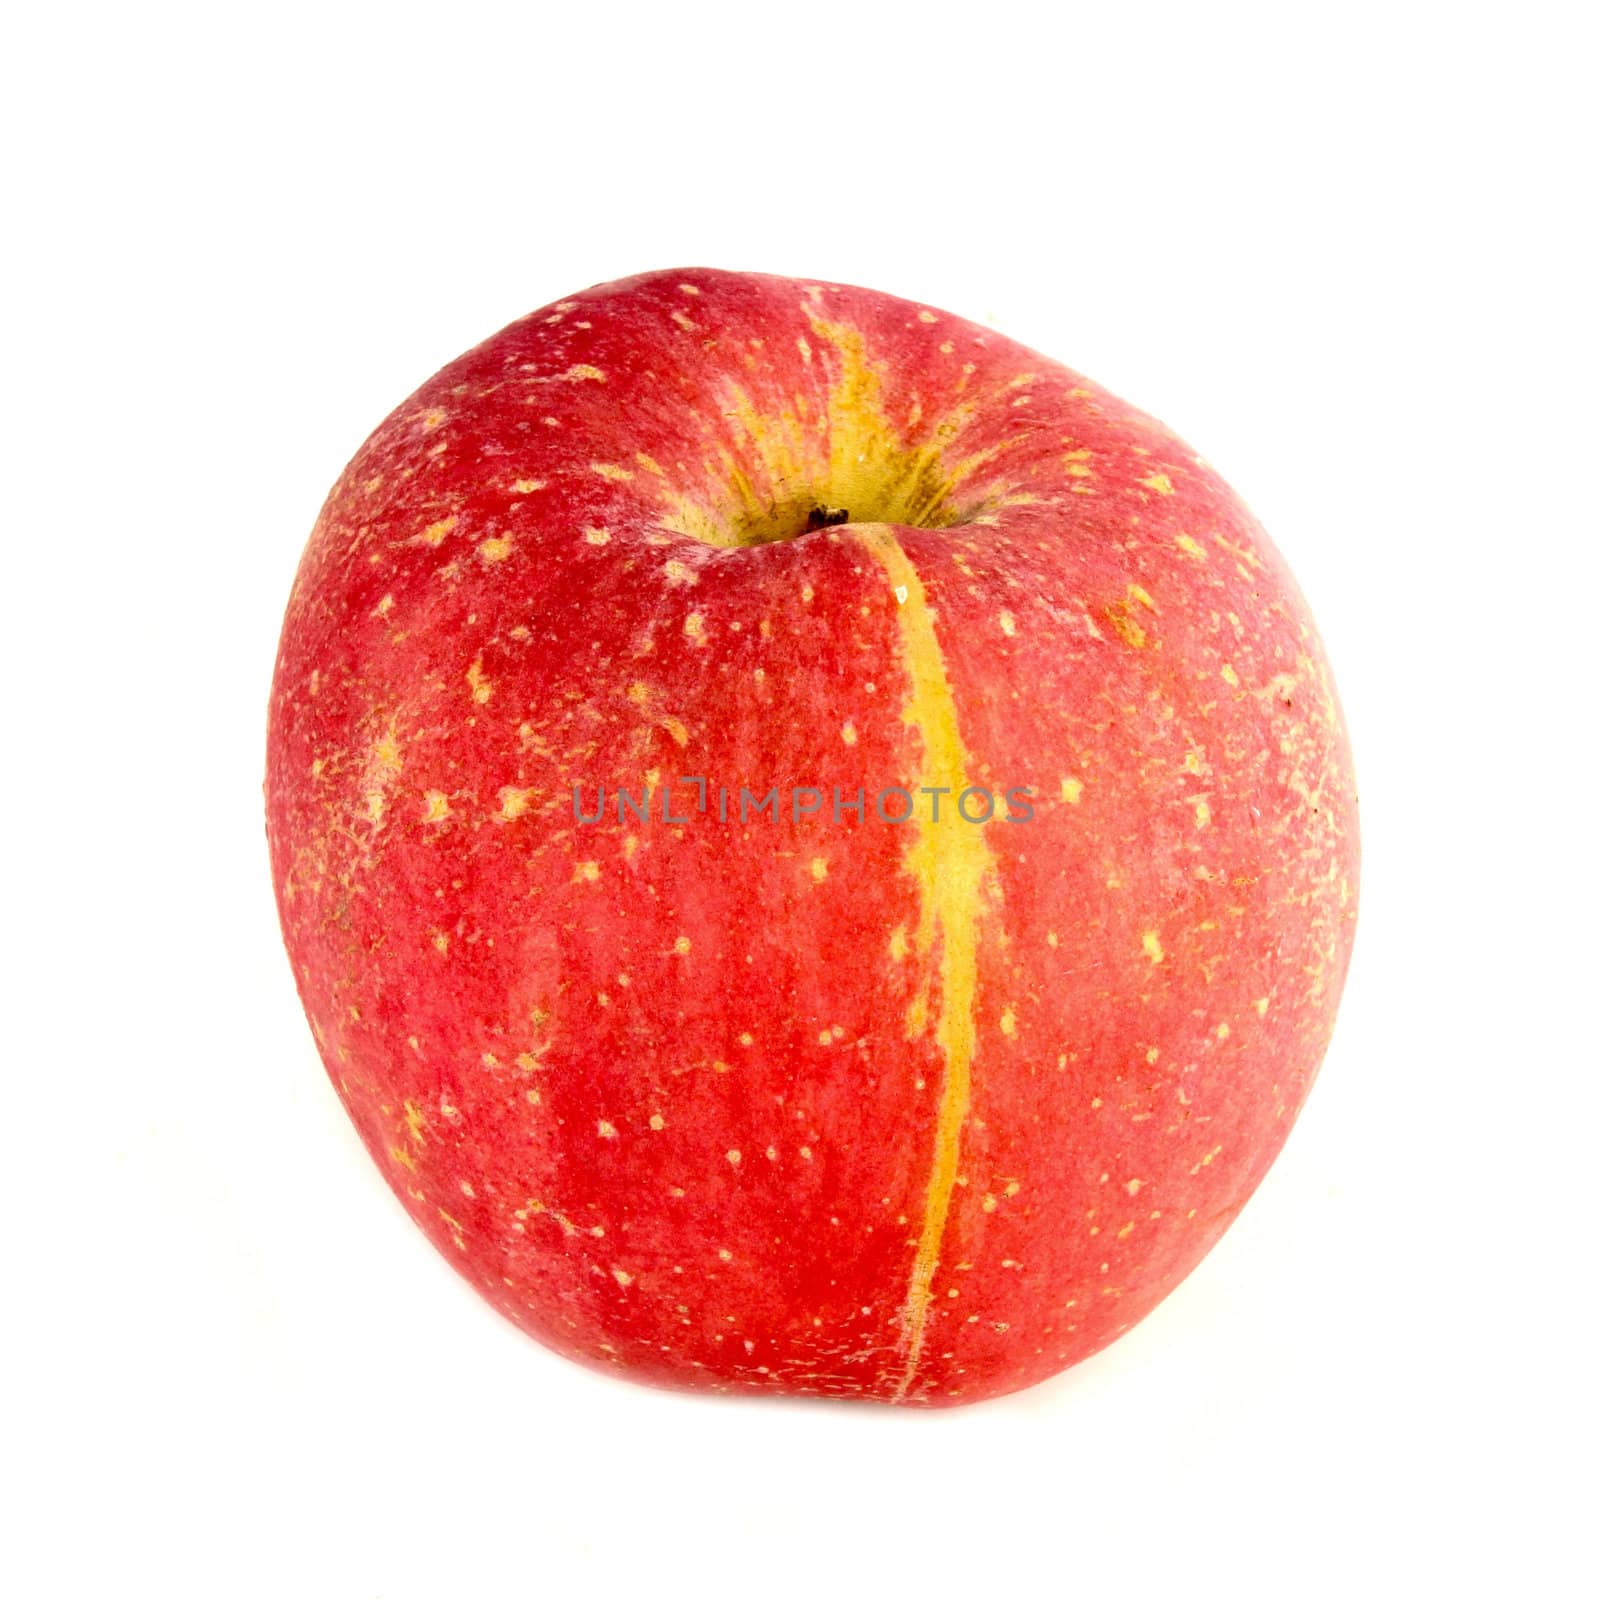 apple on white background by geargodz